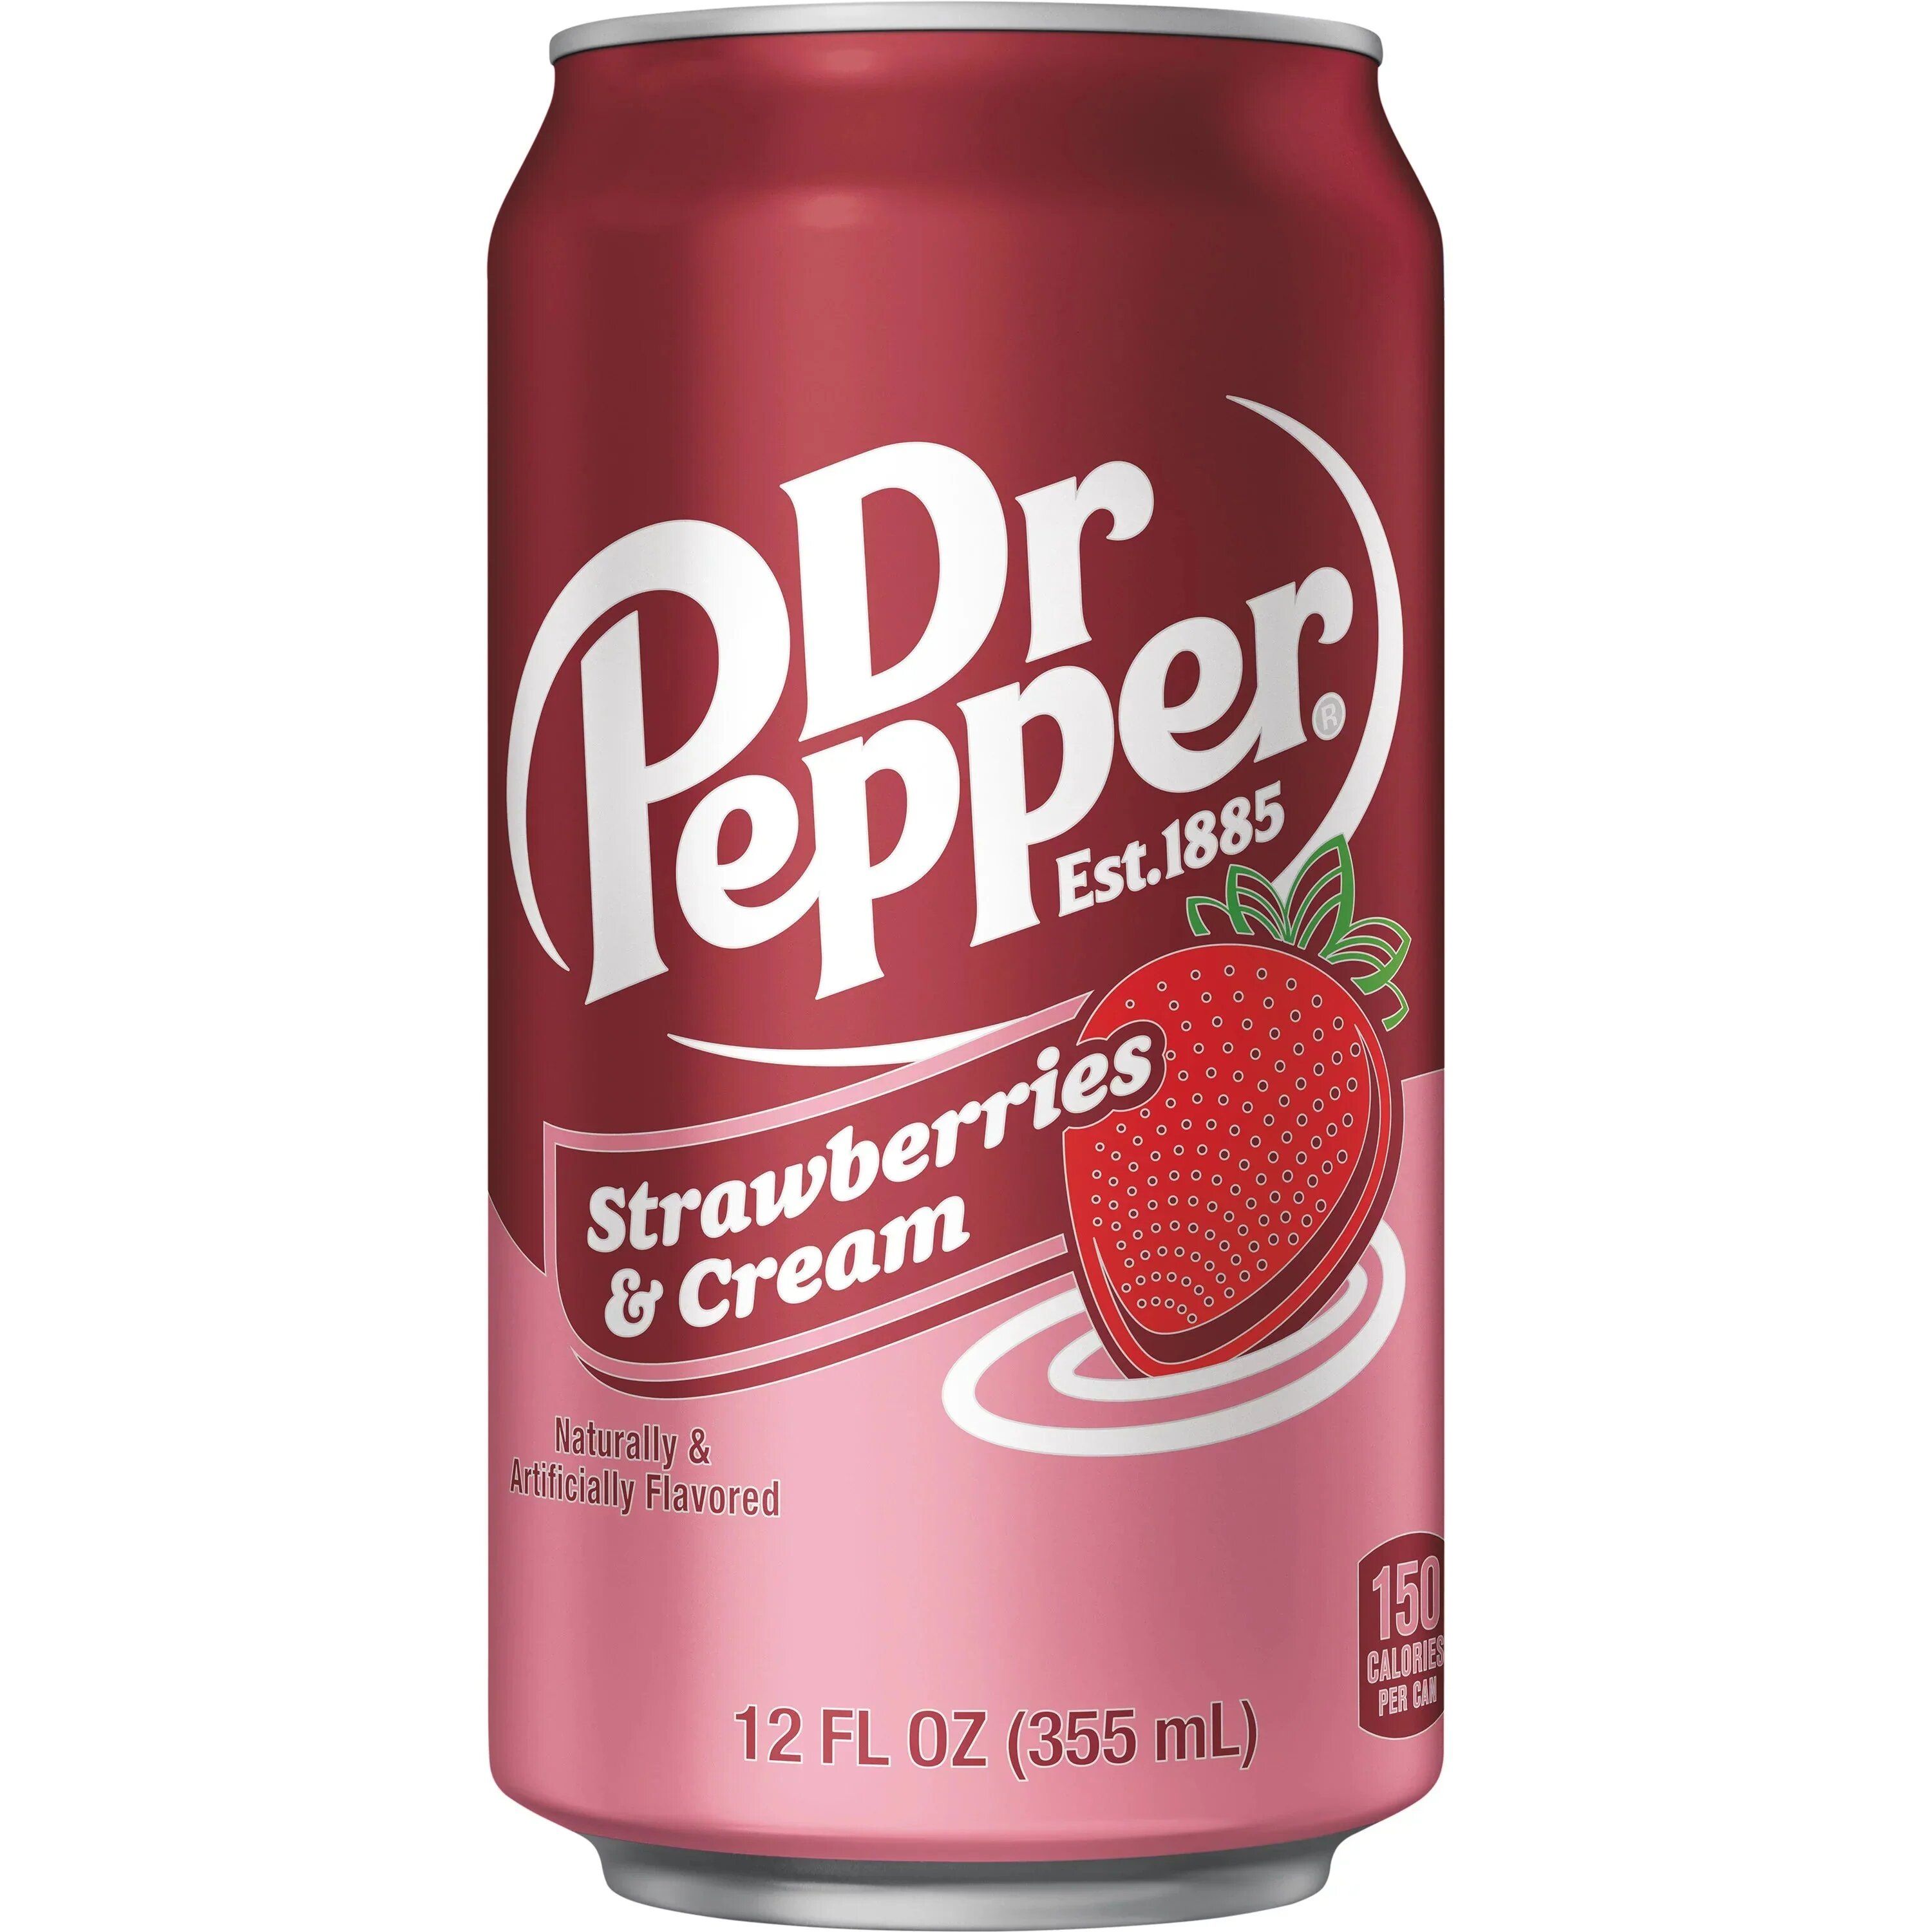 Pepper напиток. Dr Pepper Strawberry Cream. Доктор Пеппер клубника со сливками. Доктор Пеппер напиток. Американская газировка Пеппер.